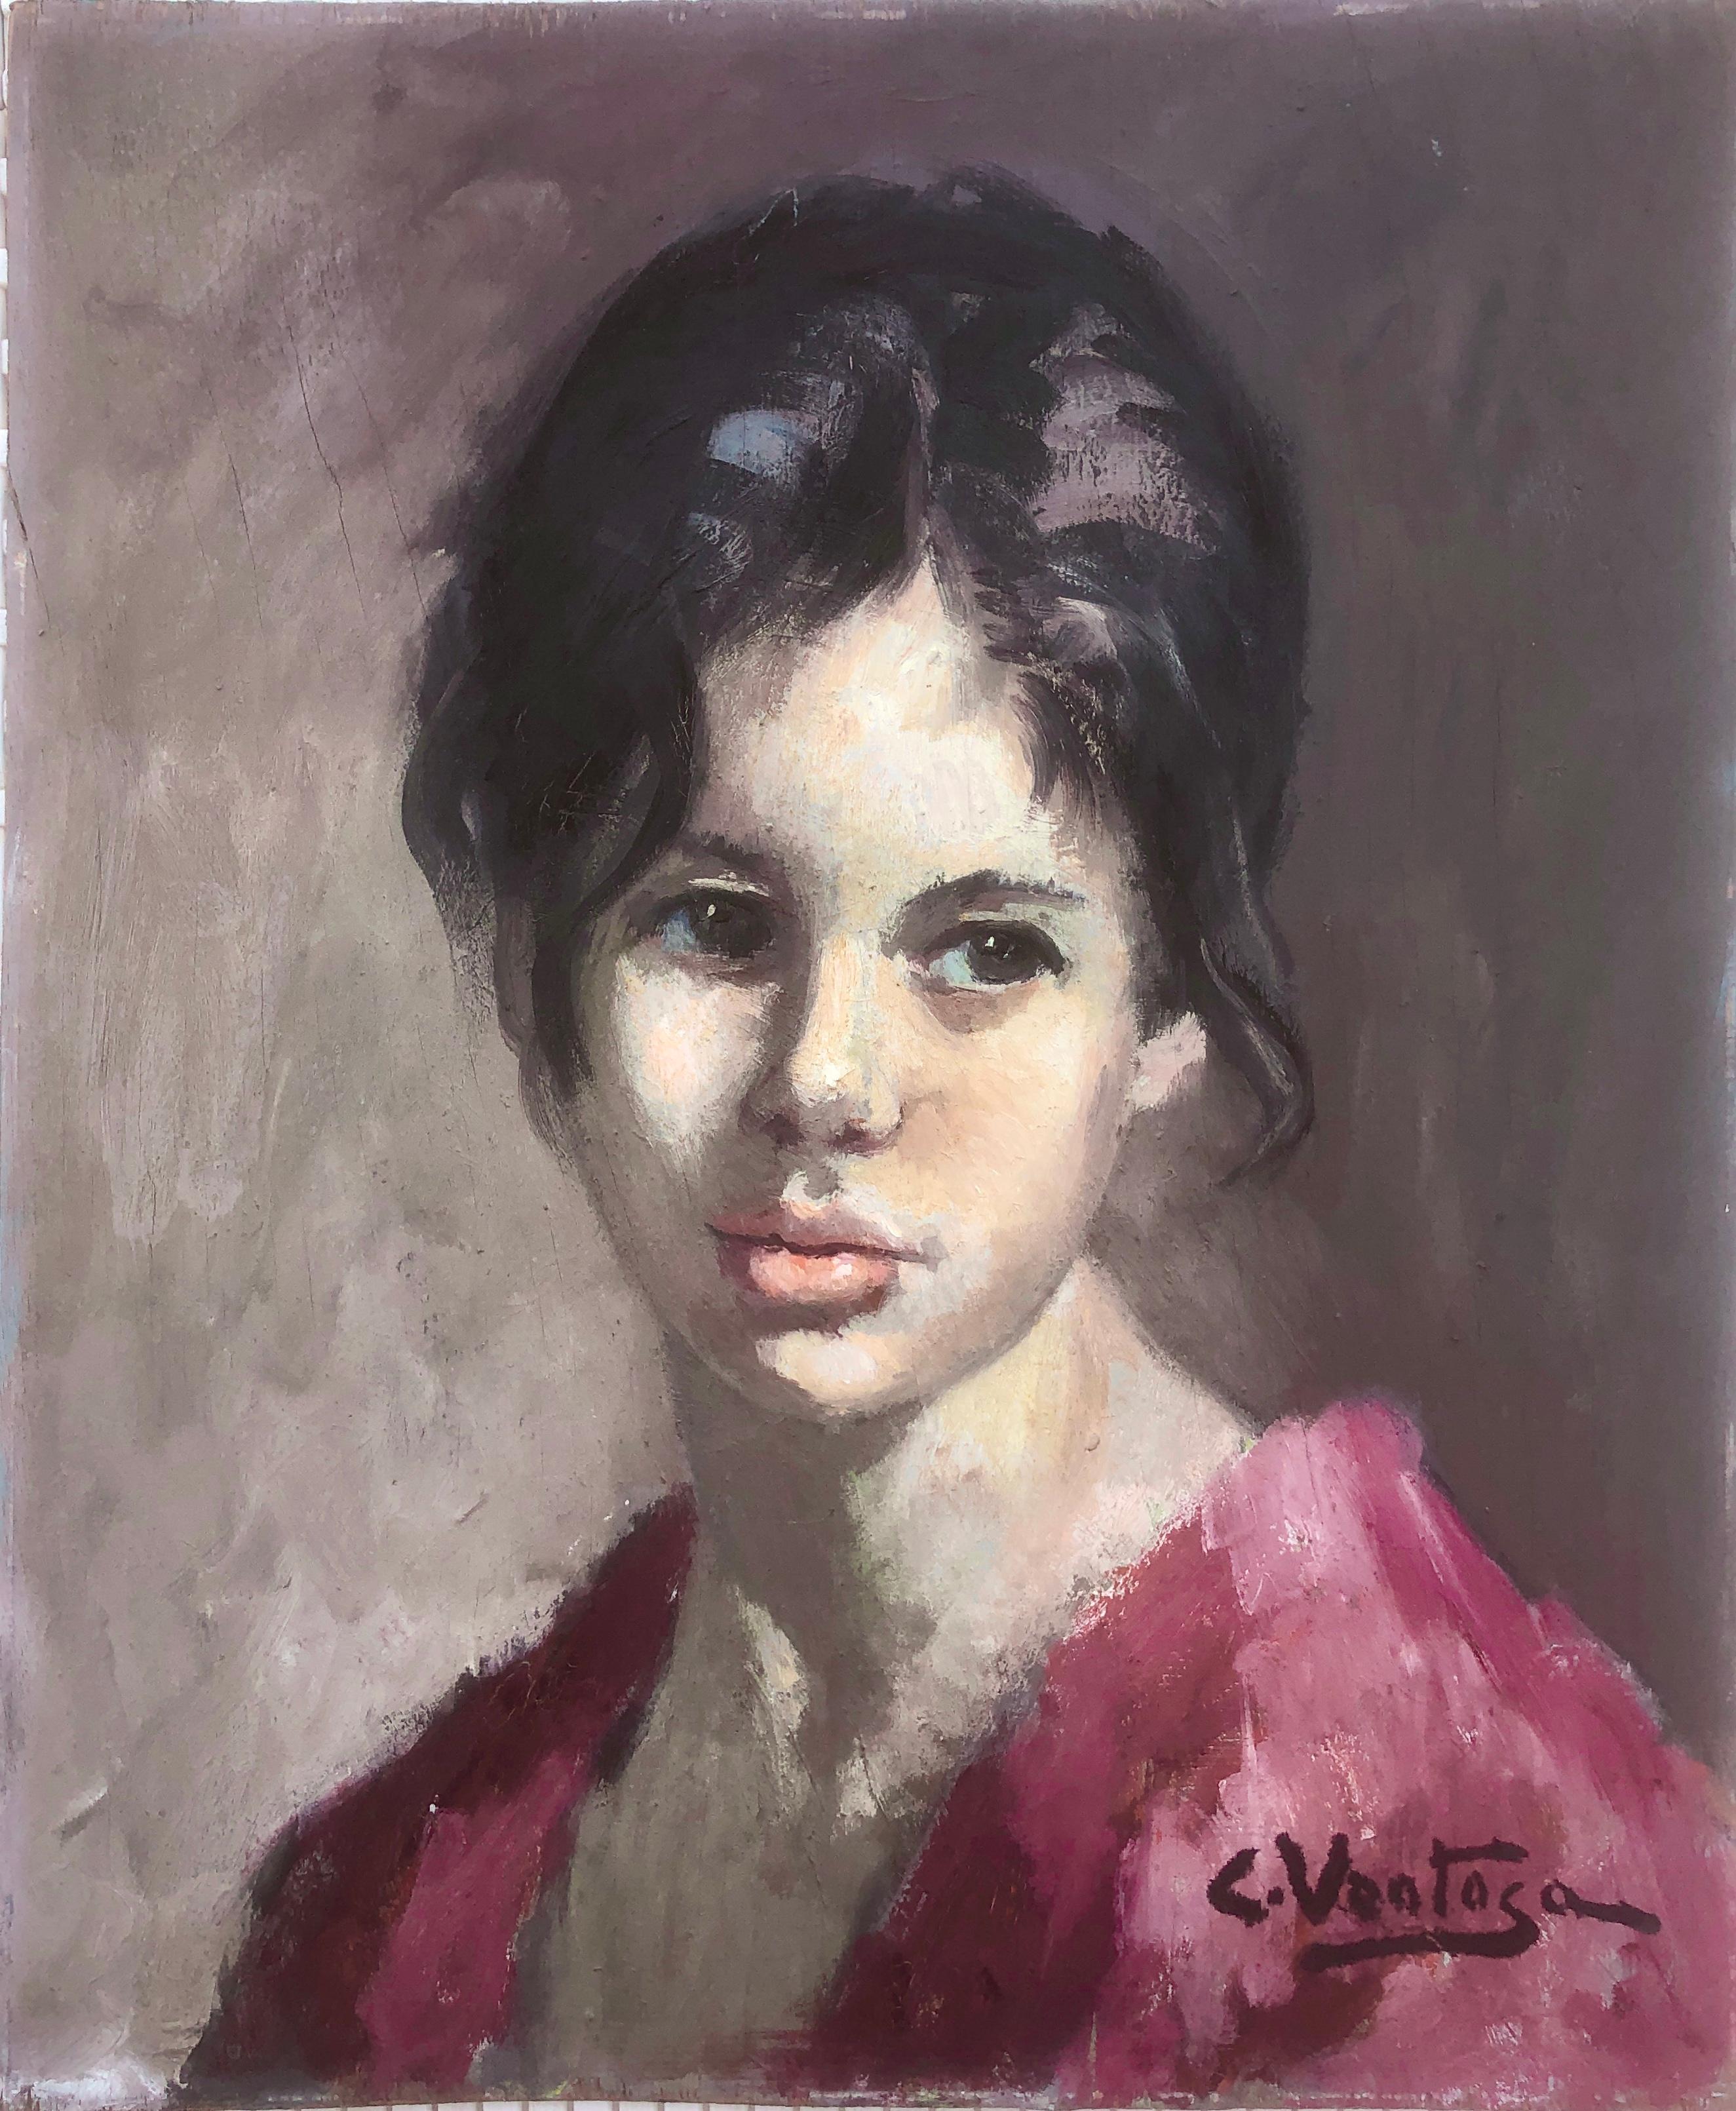 Carmen Ventosa Portrait Painting - Young girl portrait oil on canvas painting